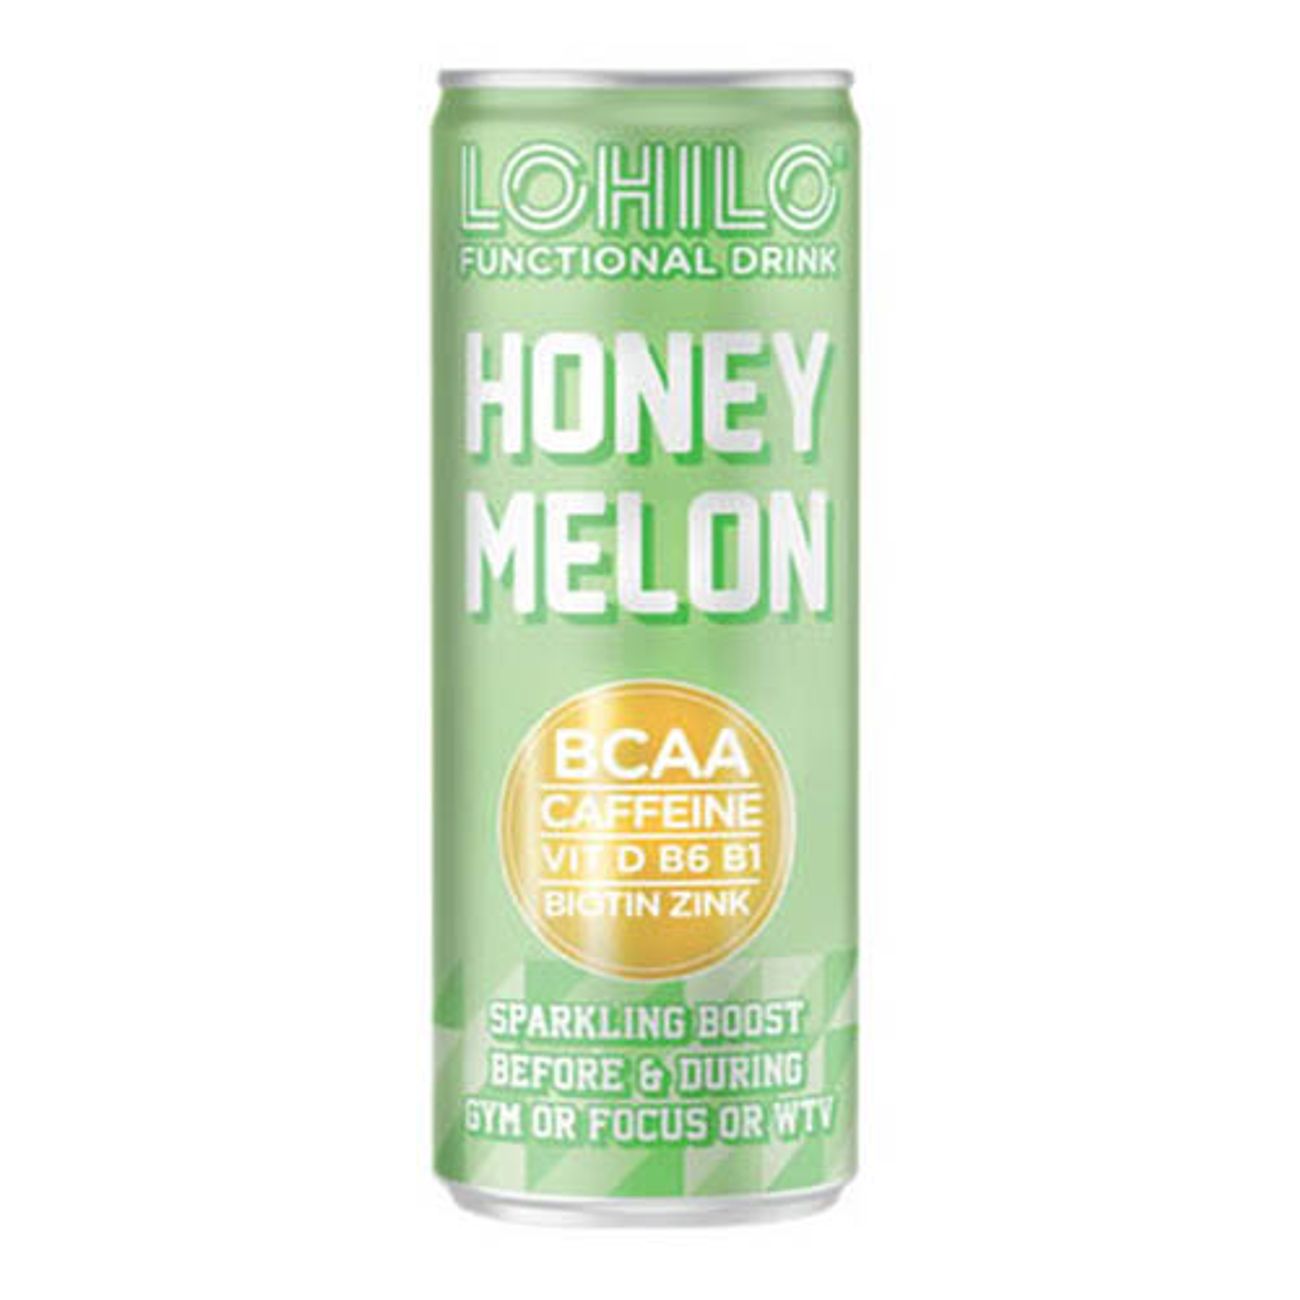 lohilo-honey-melon-1